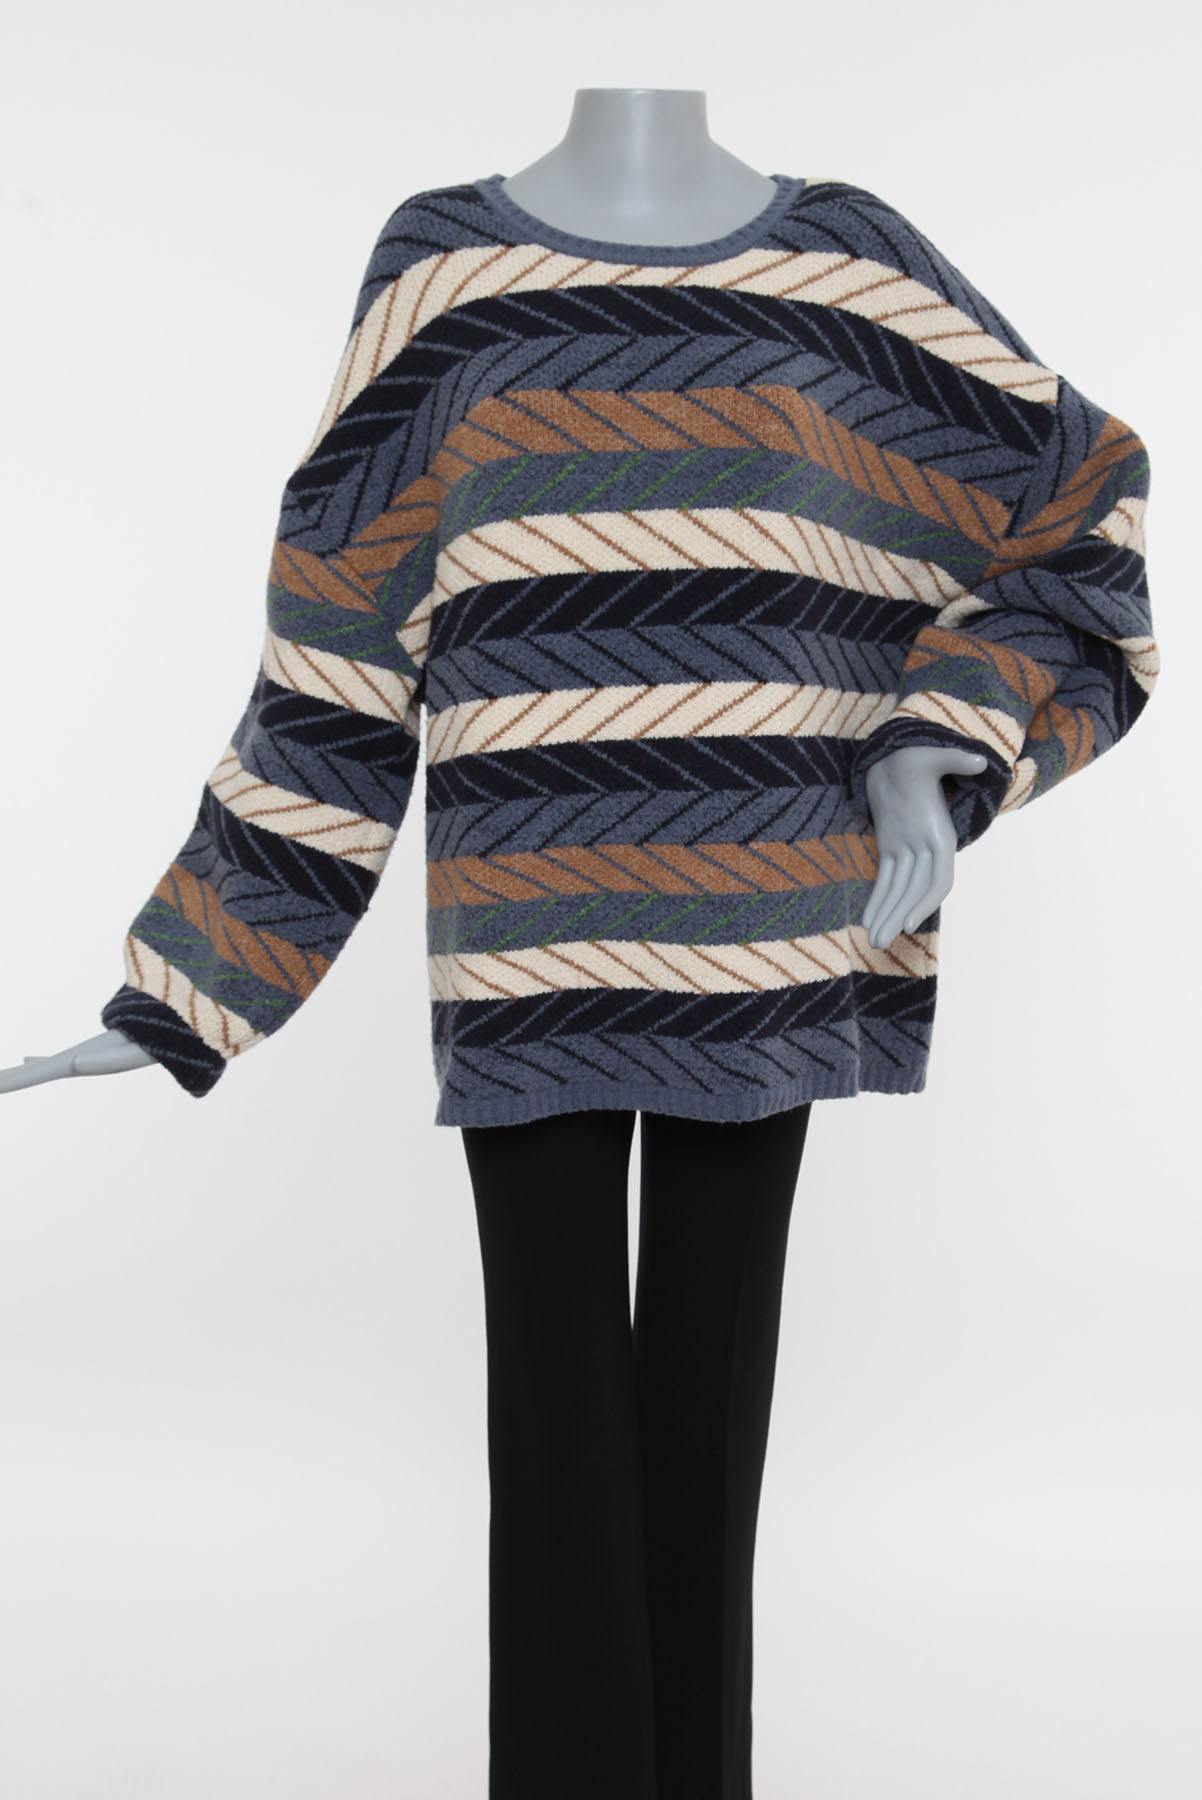 Blusa A. Niemeyer Sweater de Malha Colorido